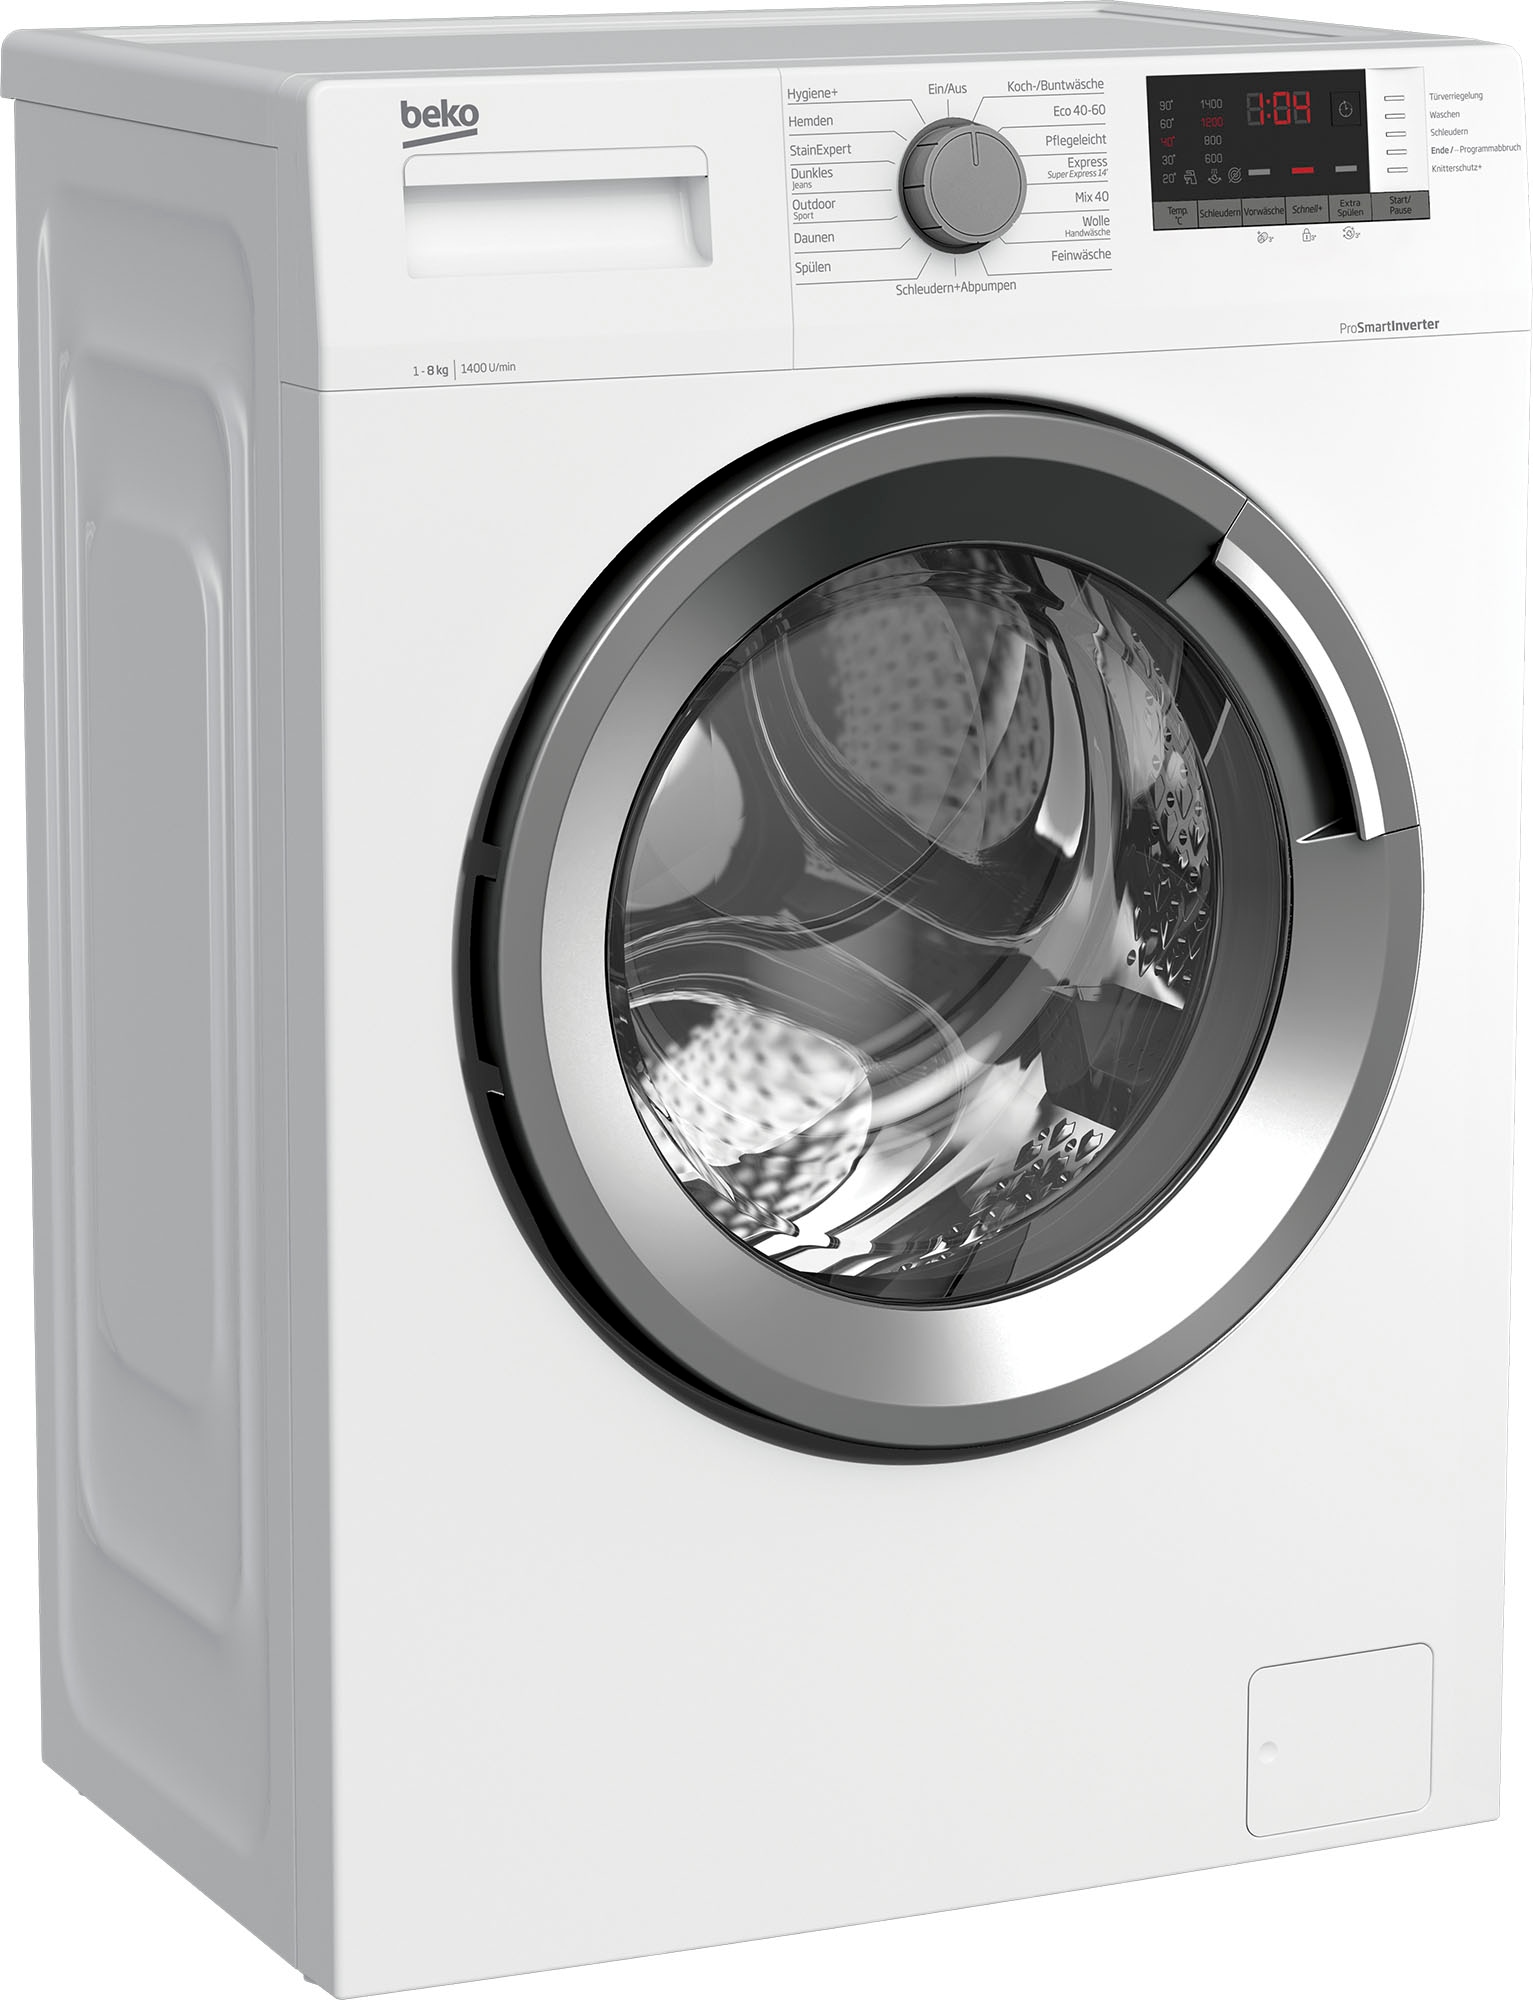 U/min Shop Waschmaschine BEKO jetzt WMO822A im OTTO kg, 7001440096, Online »WMO822A«, 8 1400